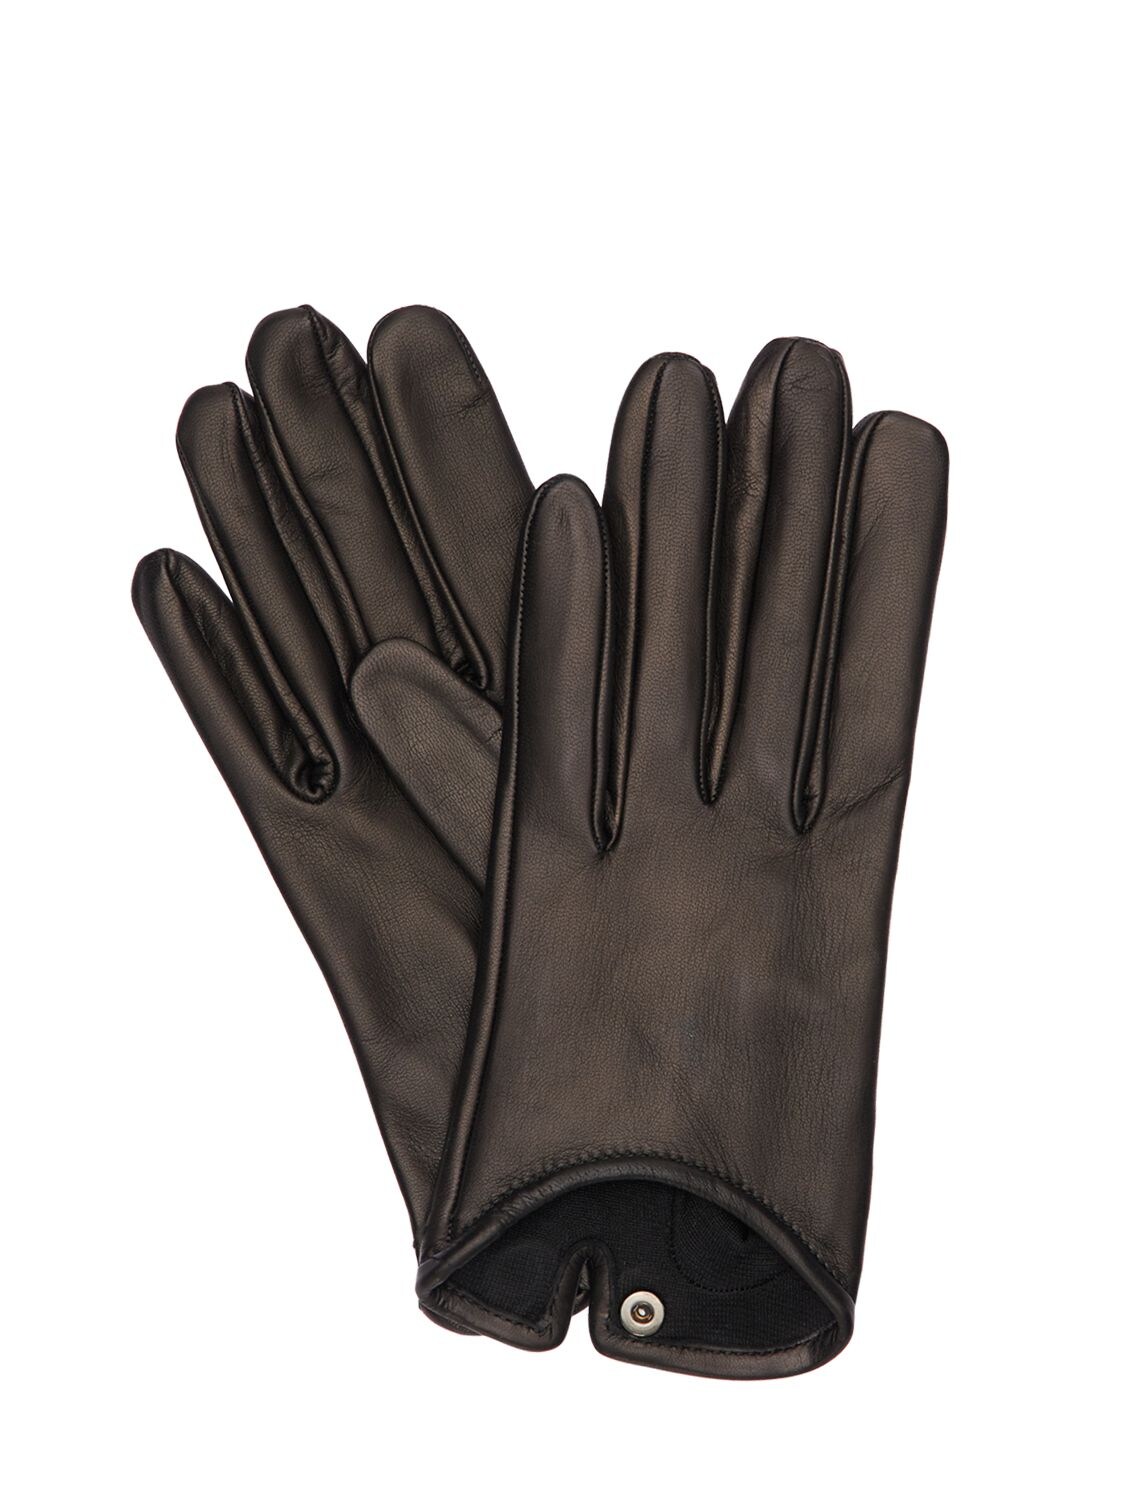 Mario Portolano Leather Gloves In Black